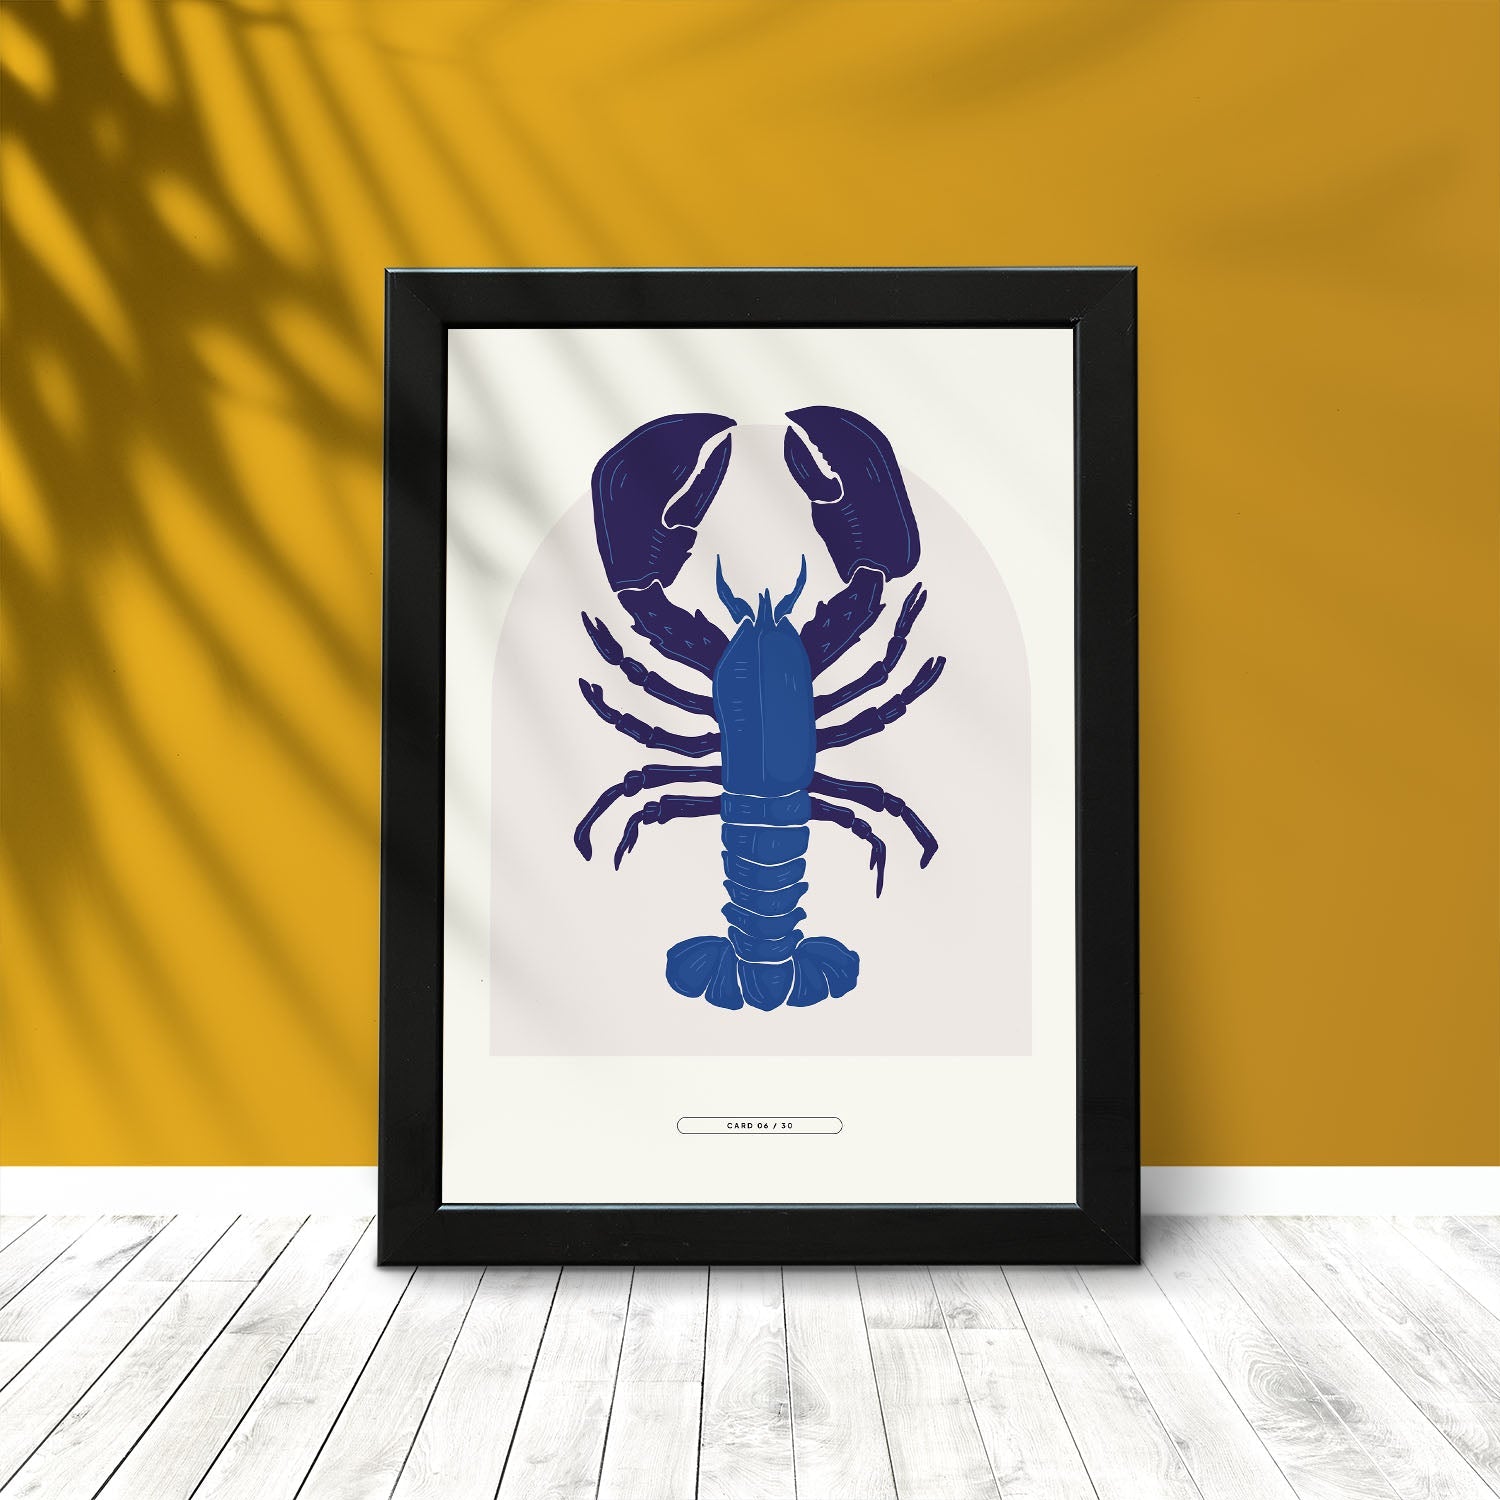 Lobster-Artwork-Nacnic-Nacnic Estudio SL